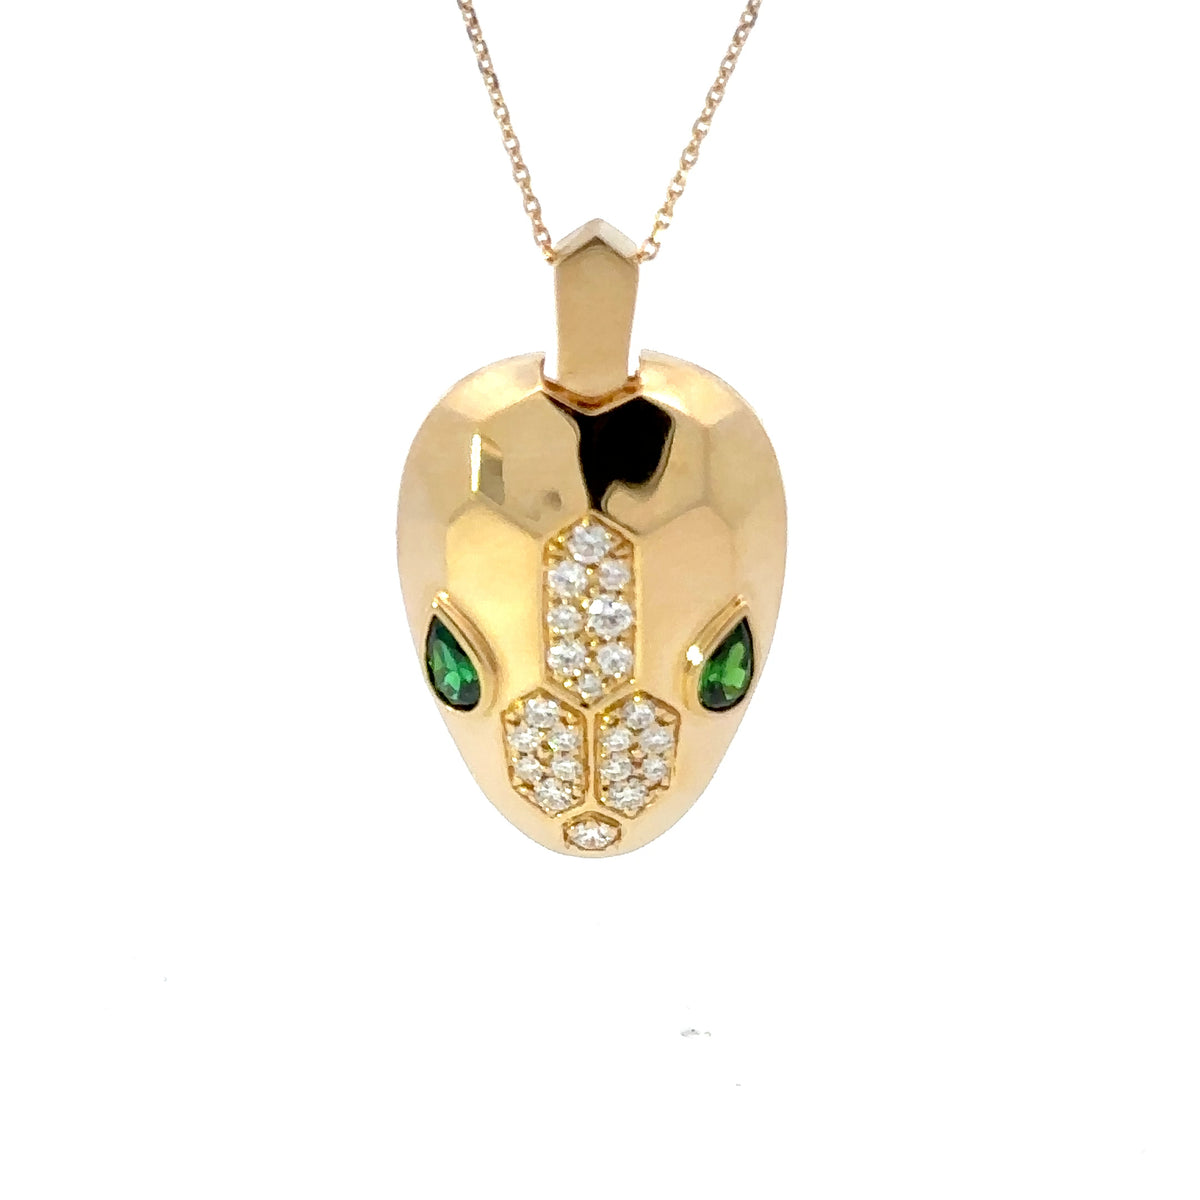 14k Yellow Gold Diamond Pendant with Vibrant Green Stones